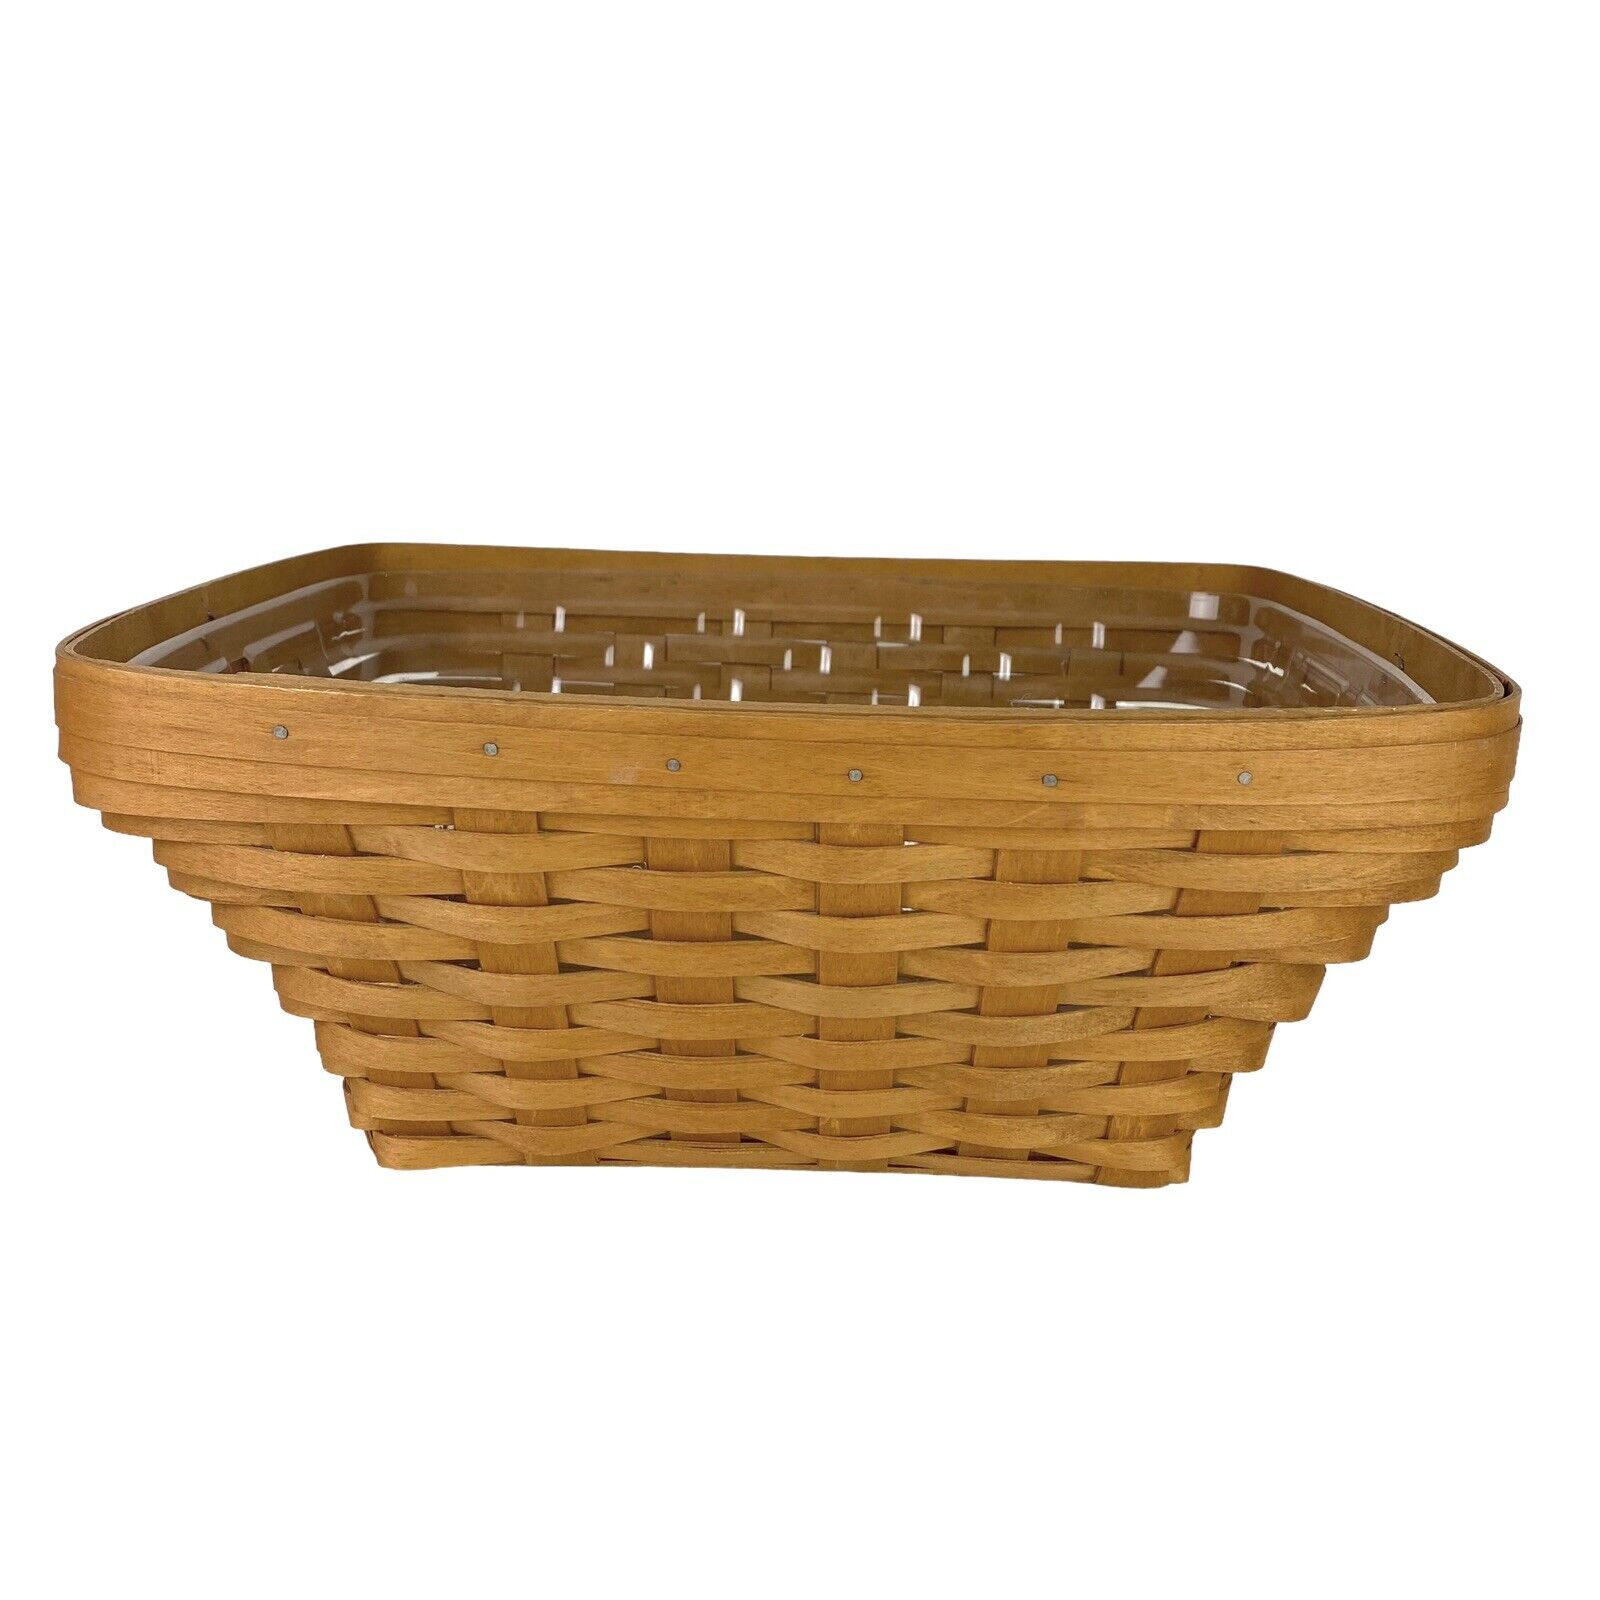 Longaberger Rectangle Storage Basket With Plastic Insert 2003 Edition Signed PBC